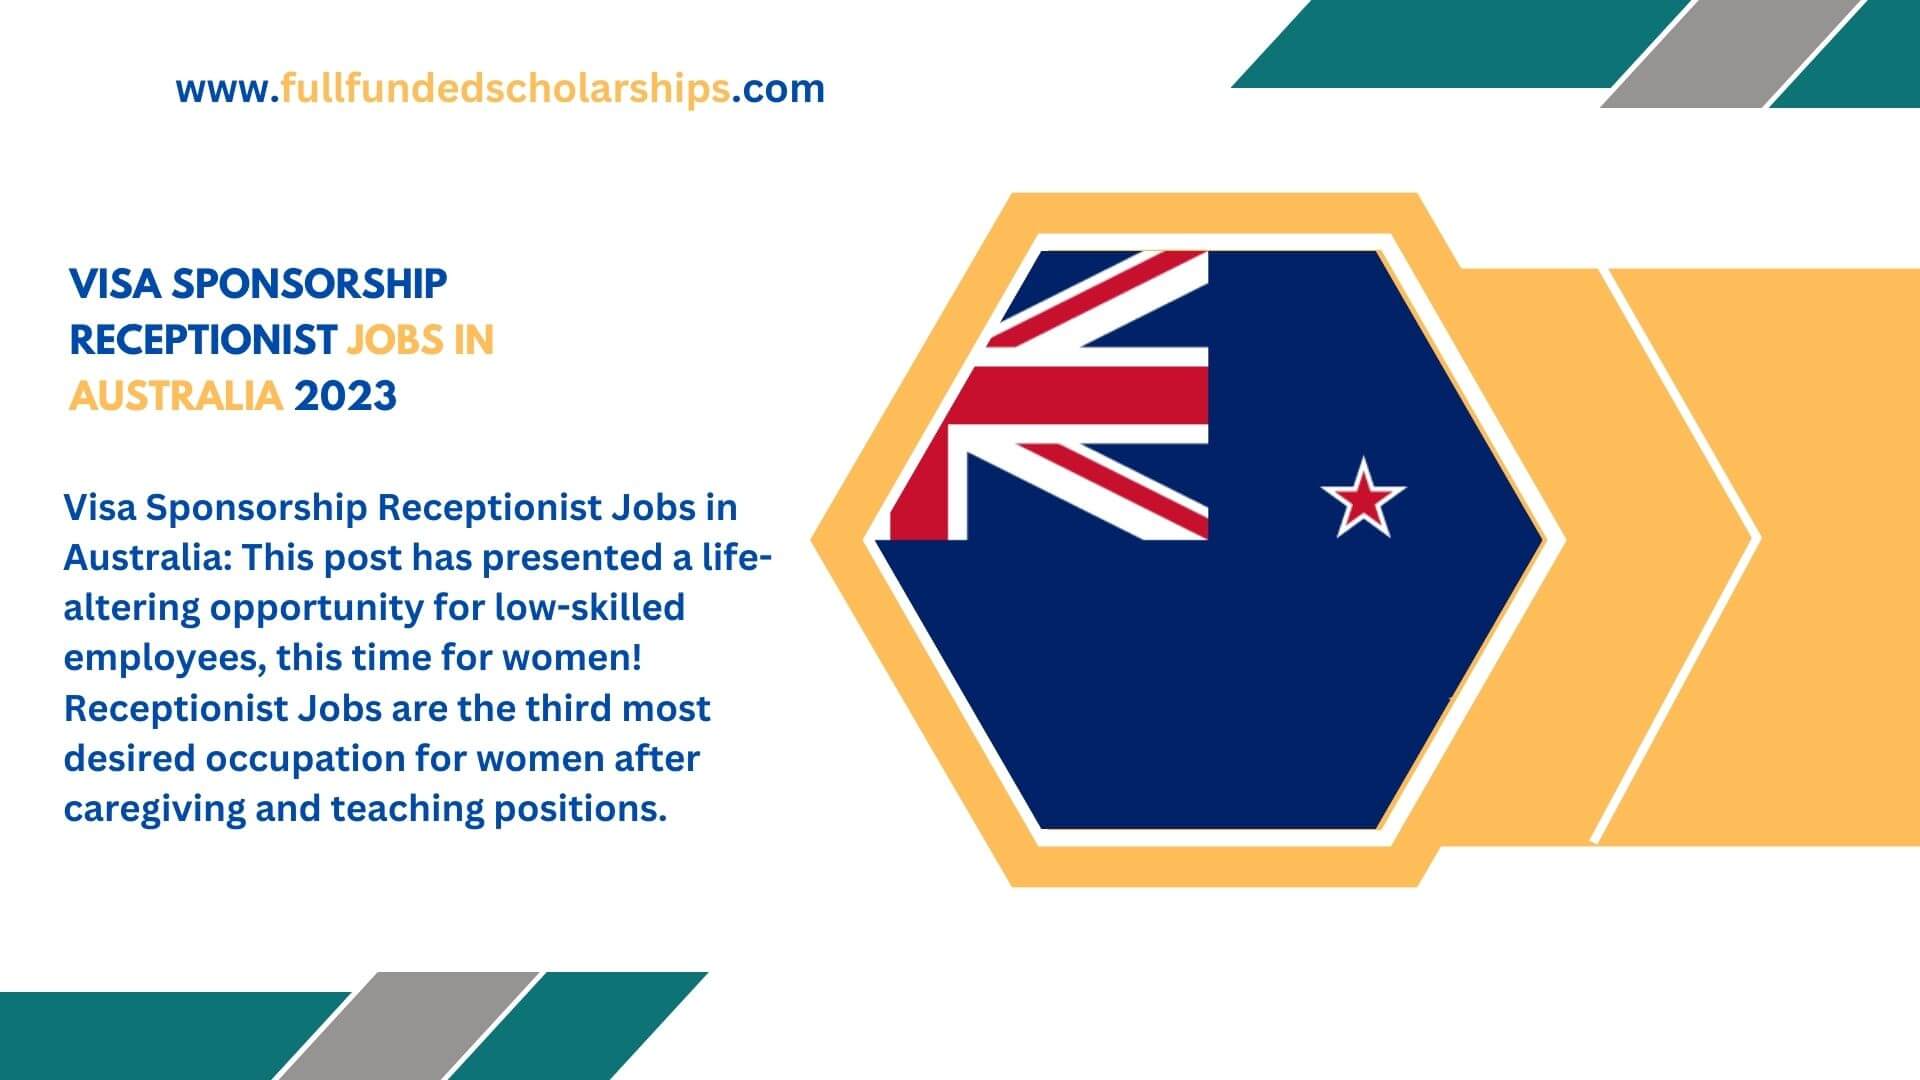 Visa Sponsorship Receptionist Jobs in Australia 2023